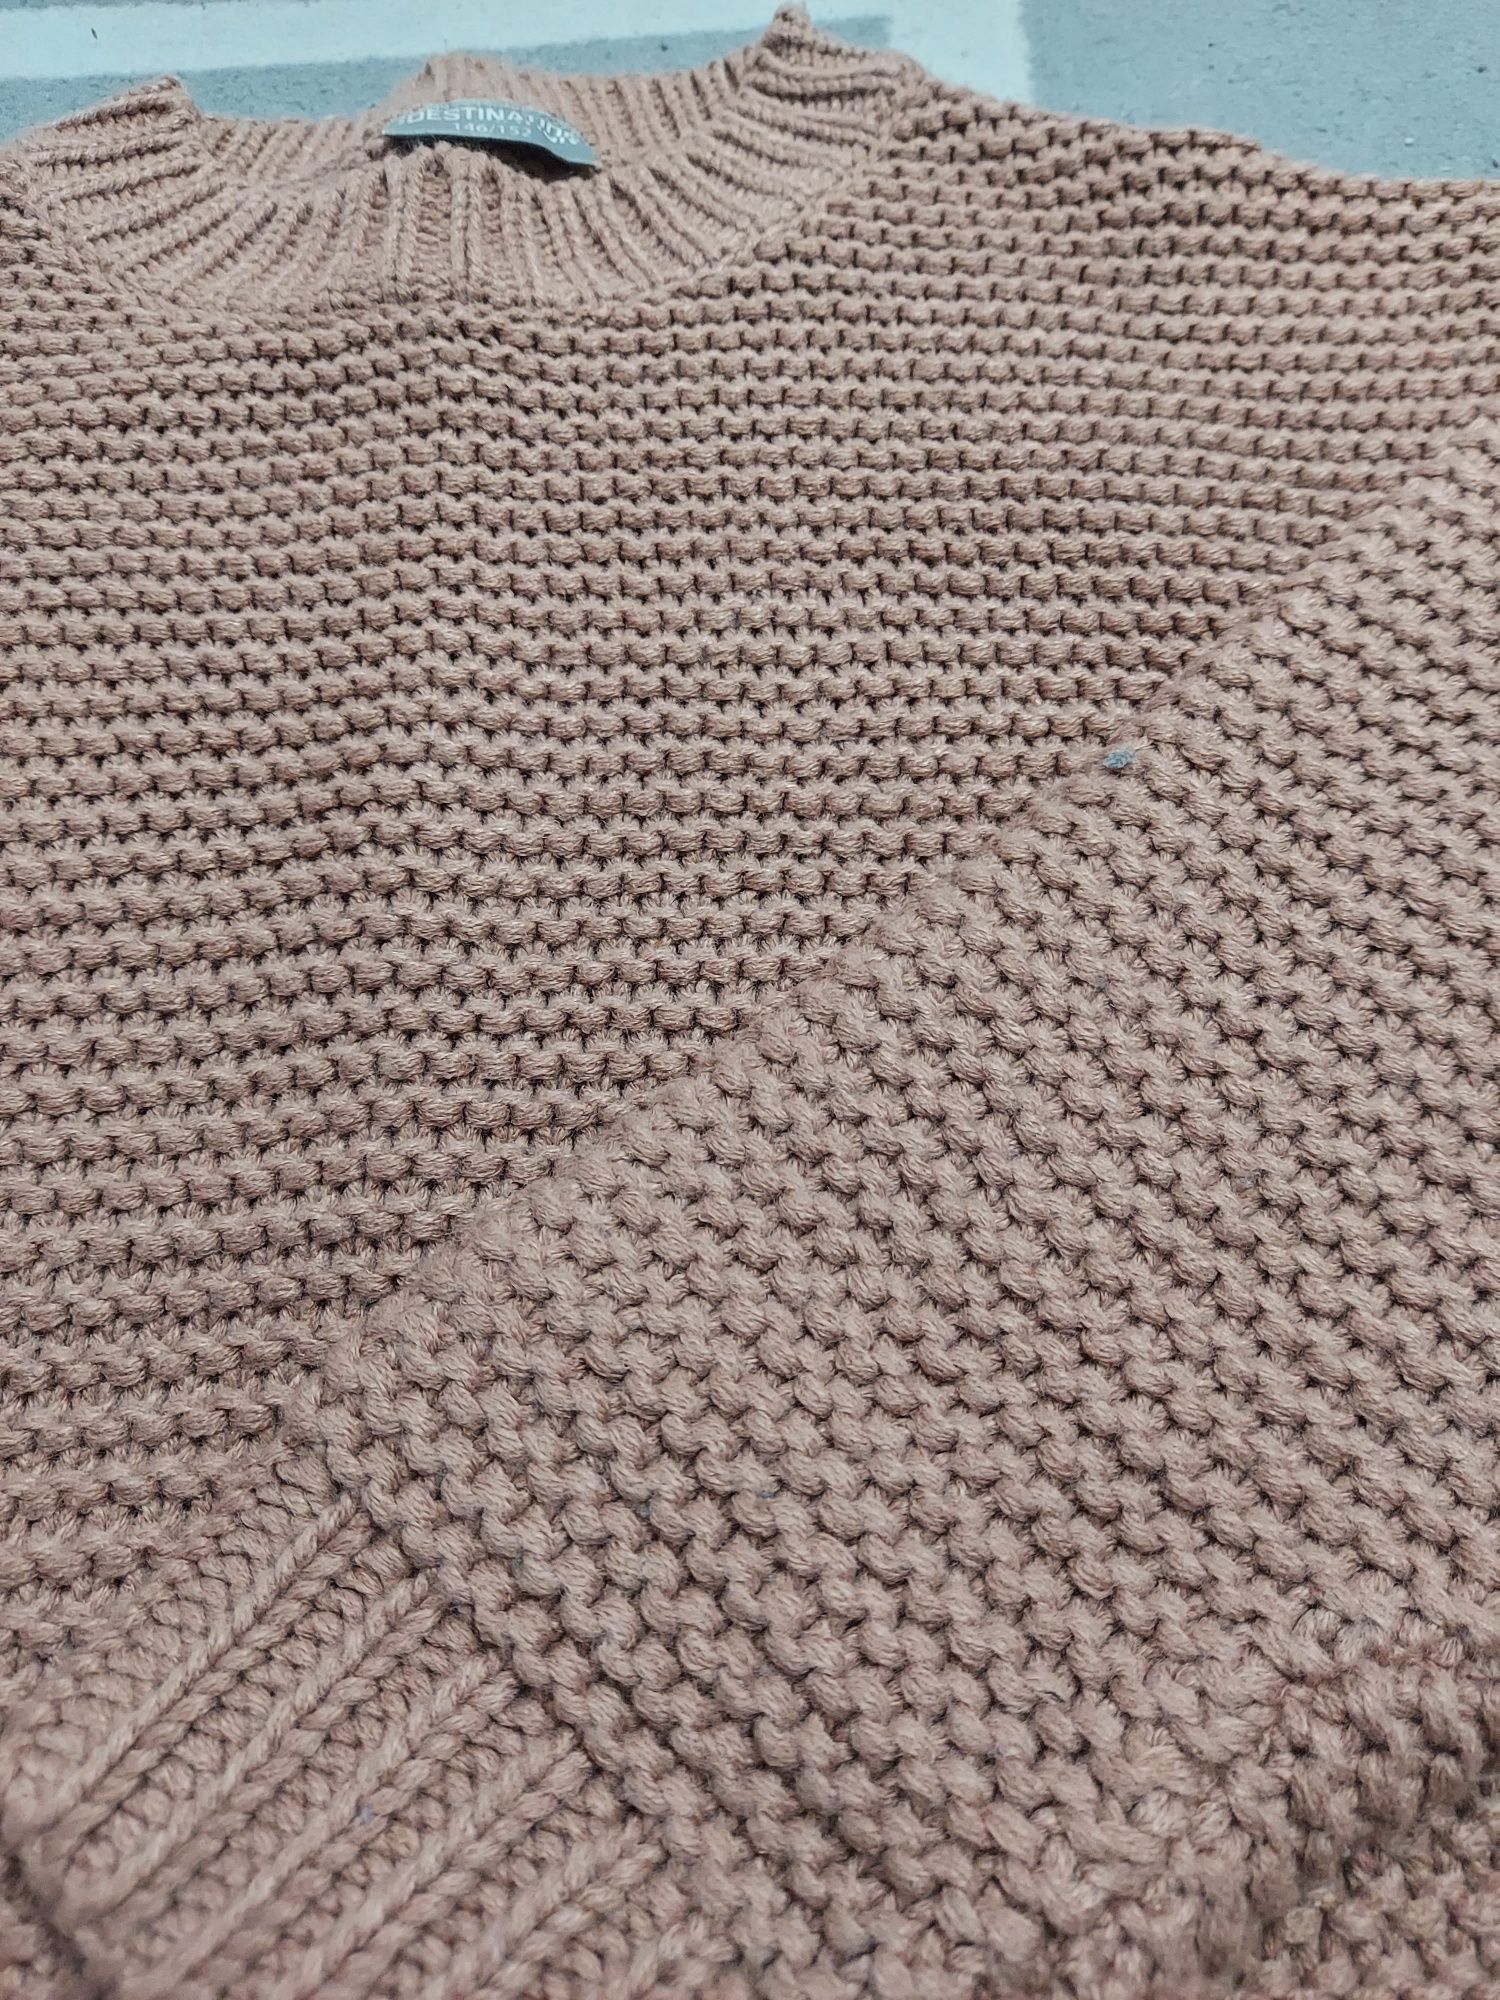 Pulover tricotat